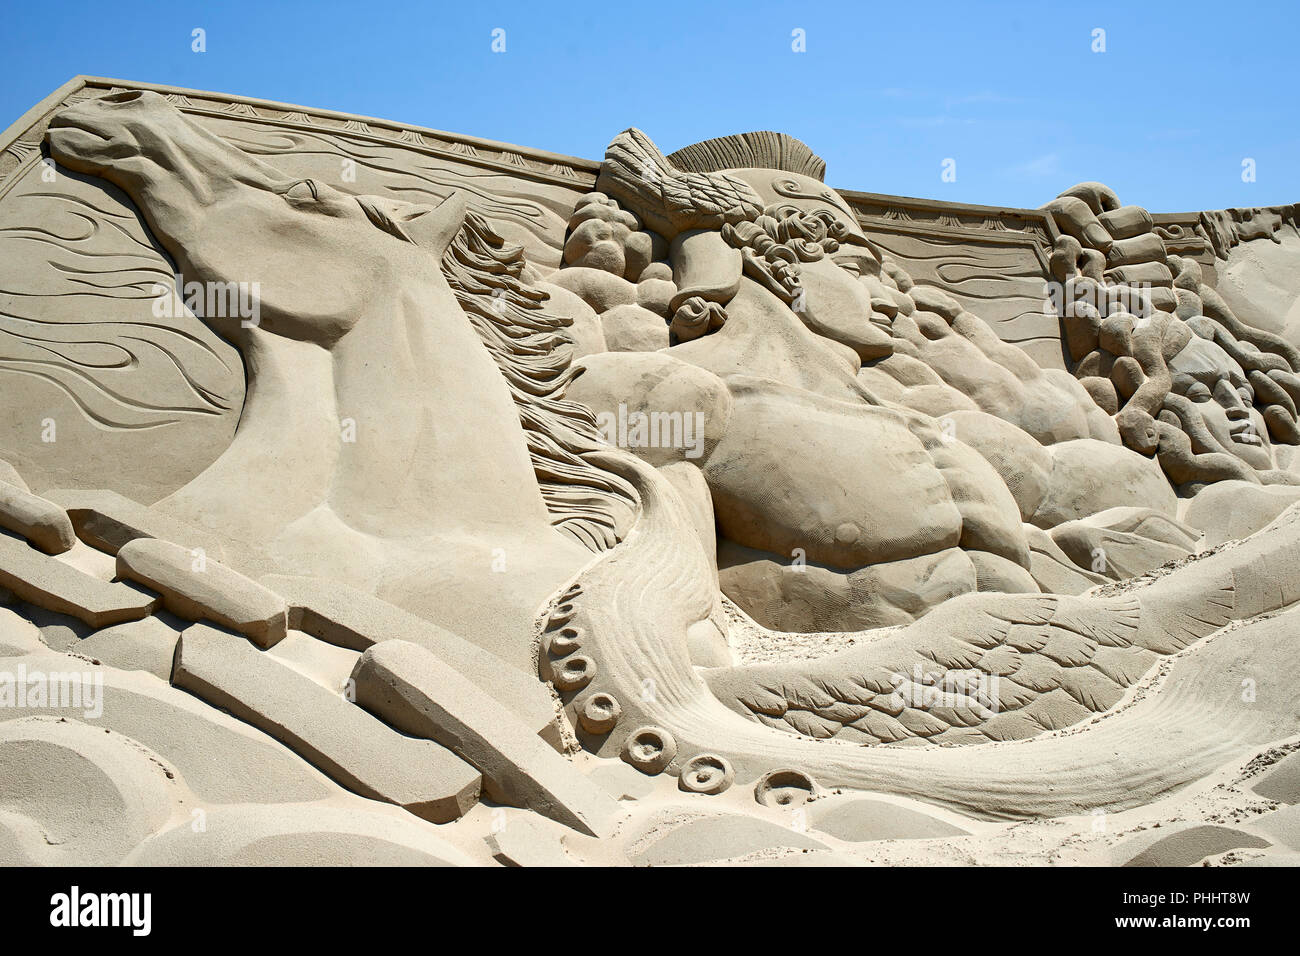 Haeundae sand Festival 2018, Busan, Korea. Held, der abgeschnitten Medusas Hals Andromeda, Toshihiko Hosaka zu speichern - lasge Skulptur Stockfoto